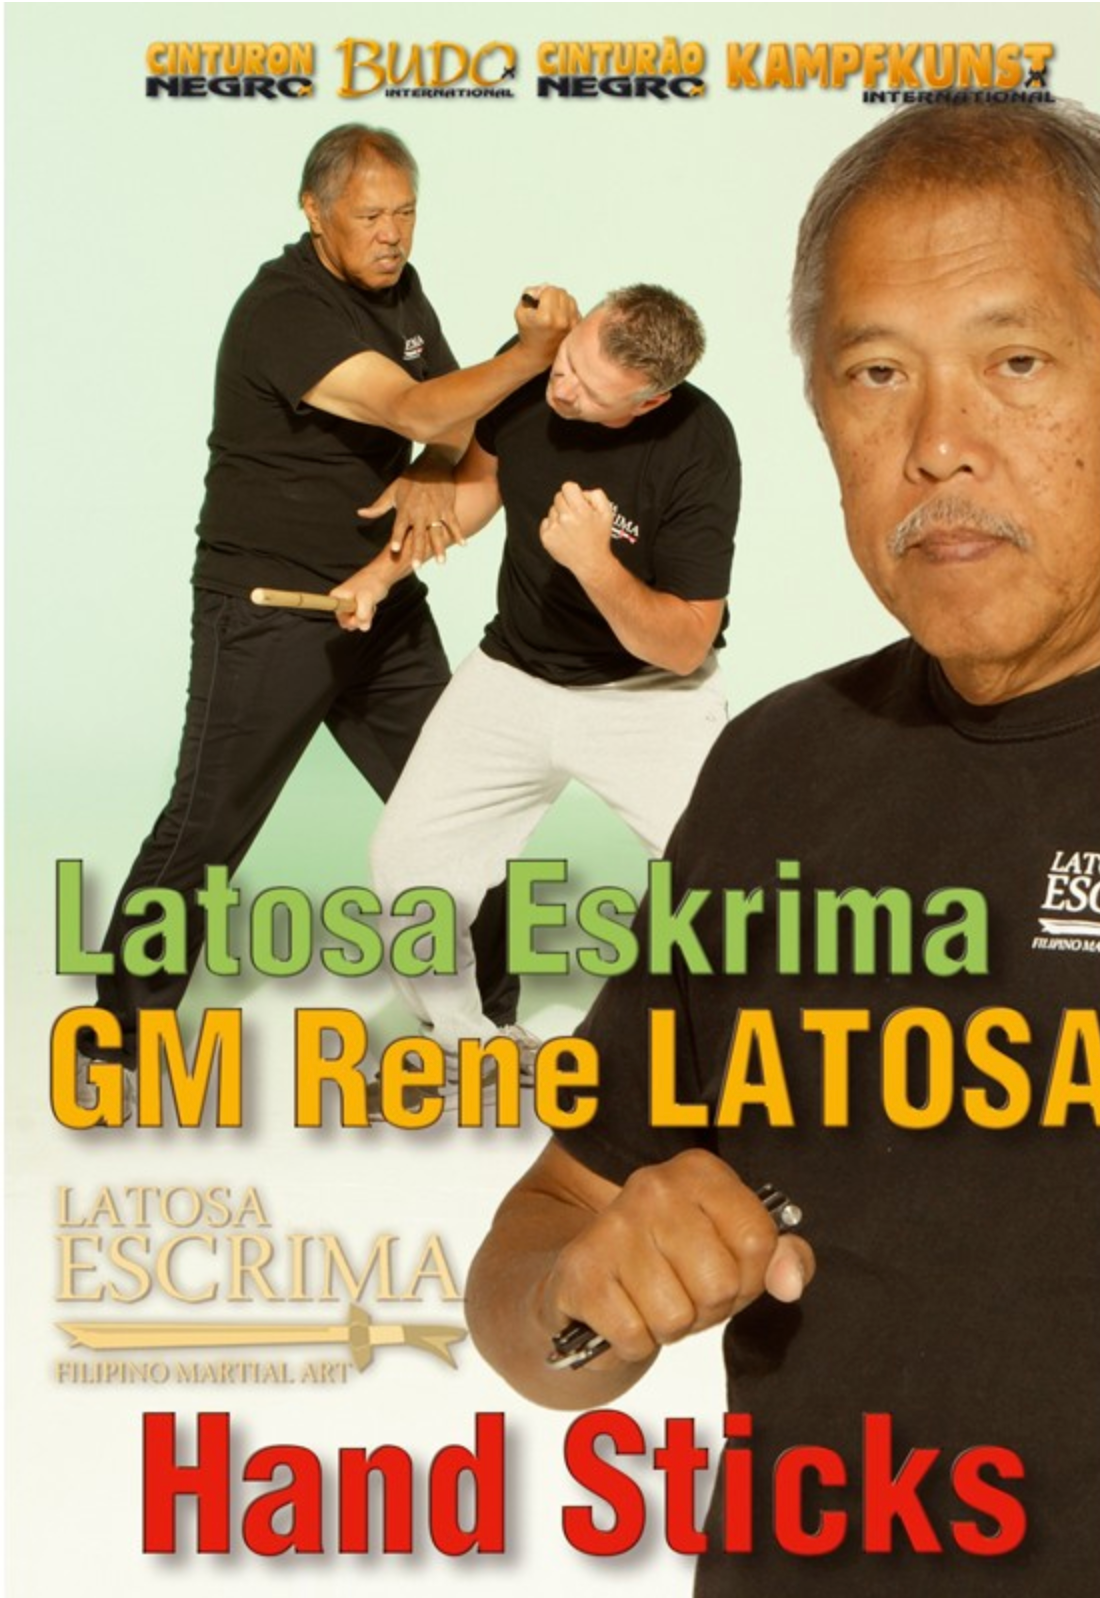 Latosa Escrima Hand Sticks DVD by Rene Latosa - Budovideos Inc